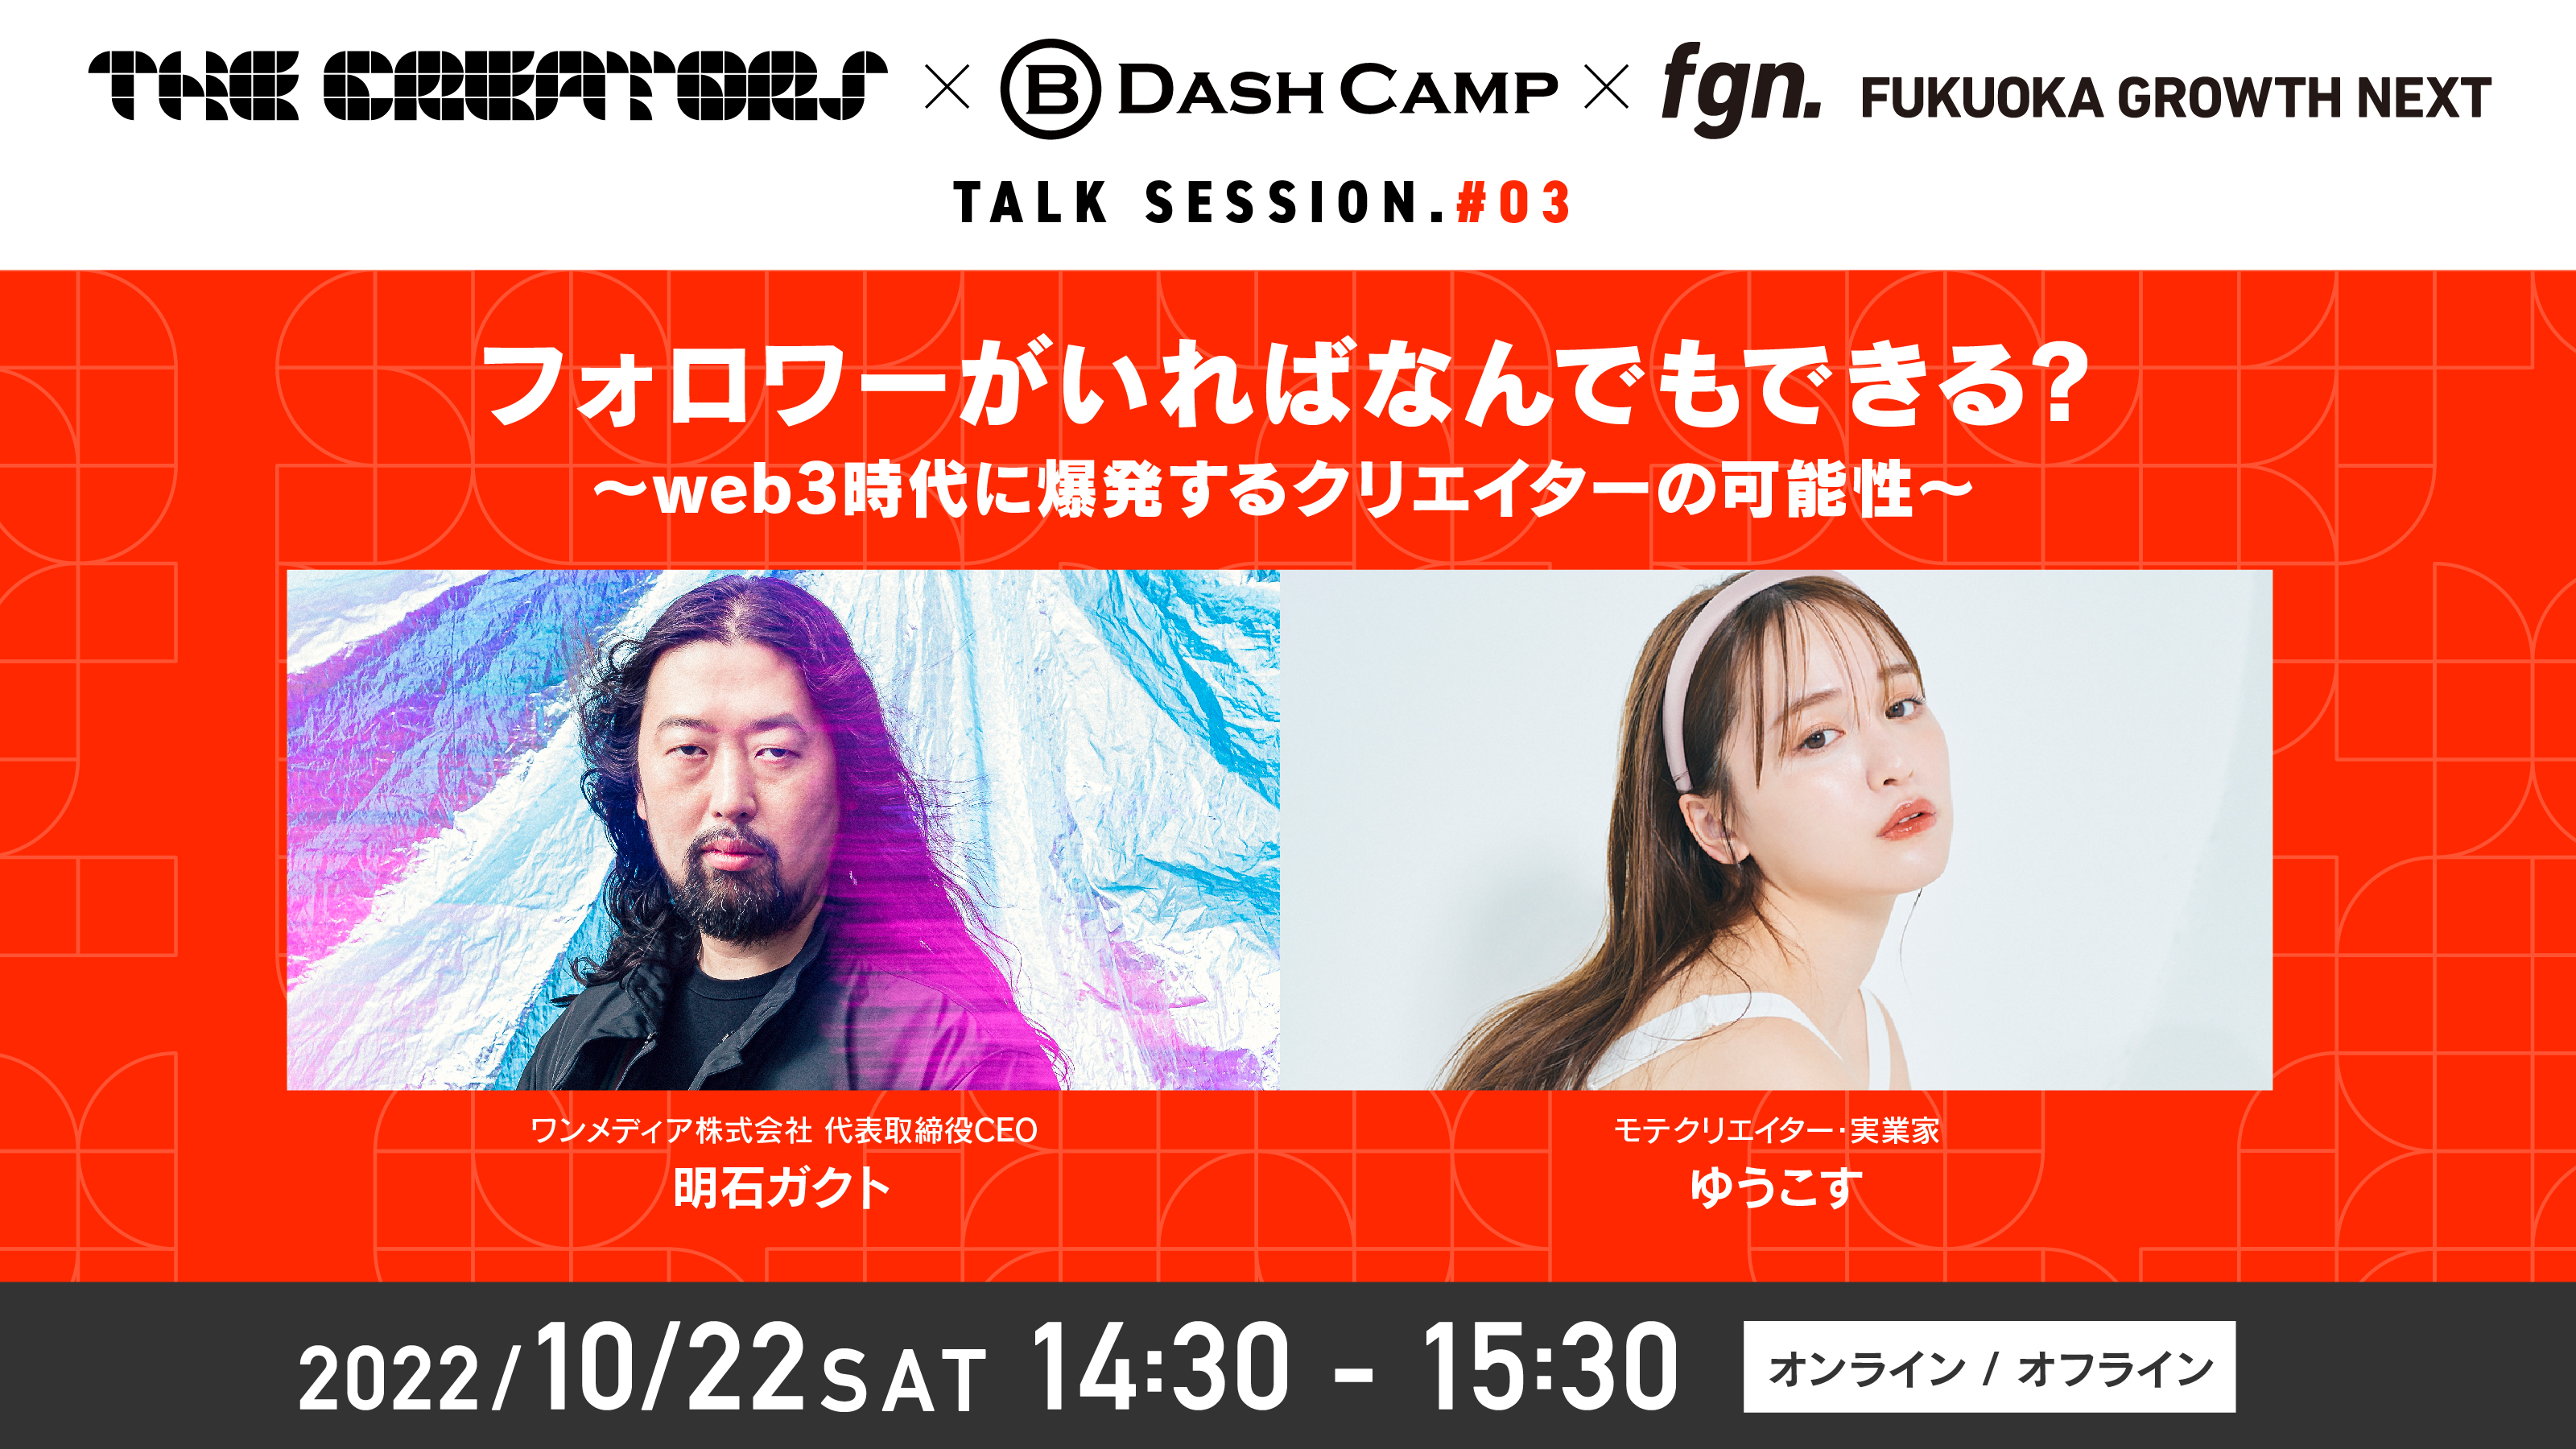 Fukuoka Growth Next × The Creators × B Dash Camp TALK SESSION #03